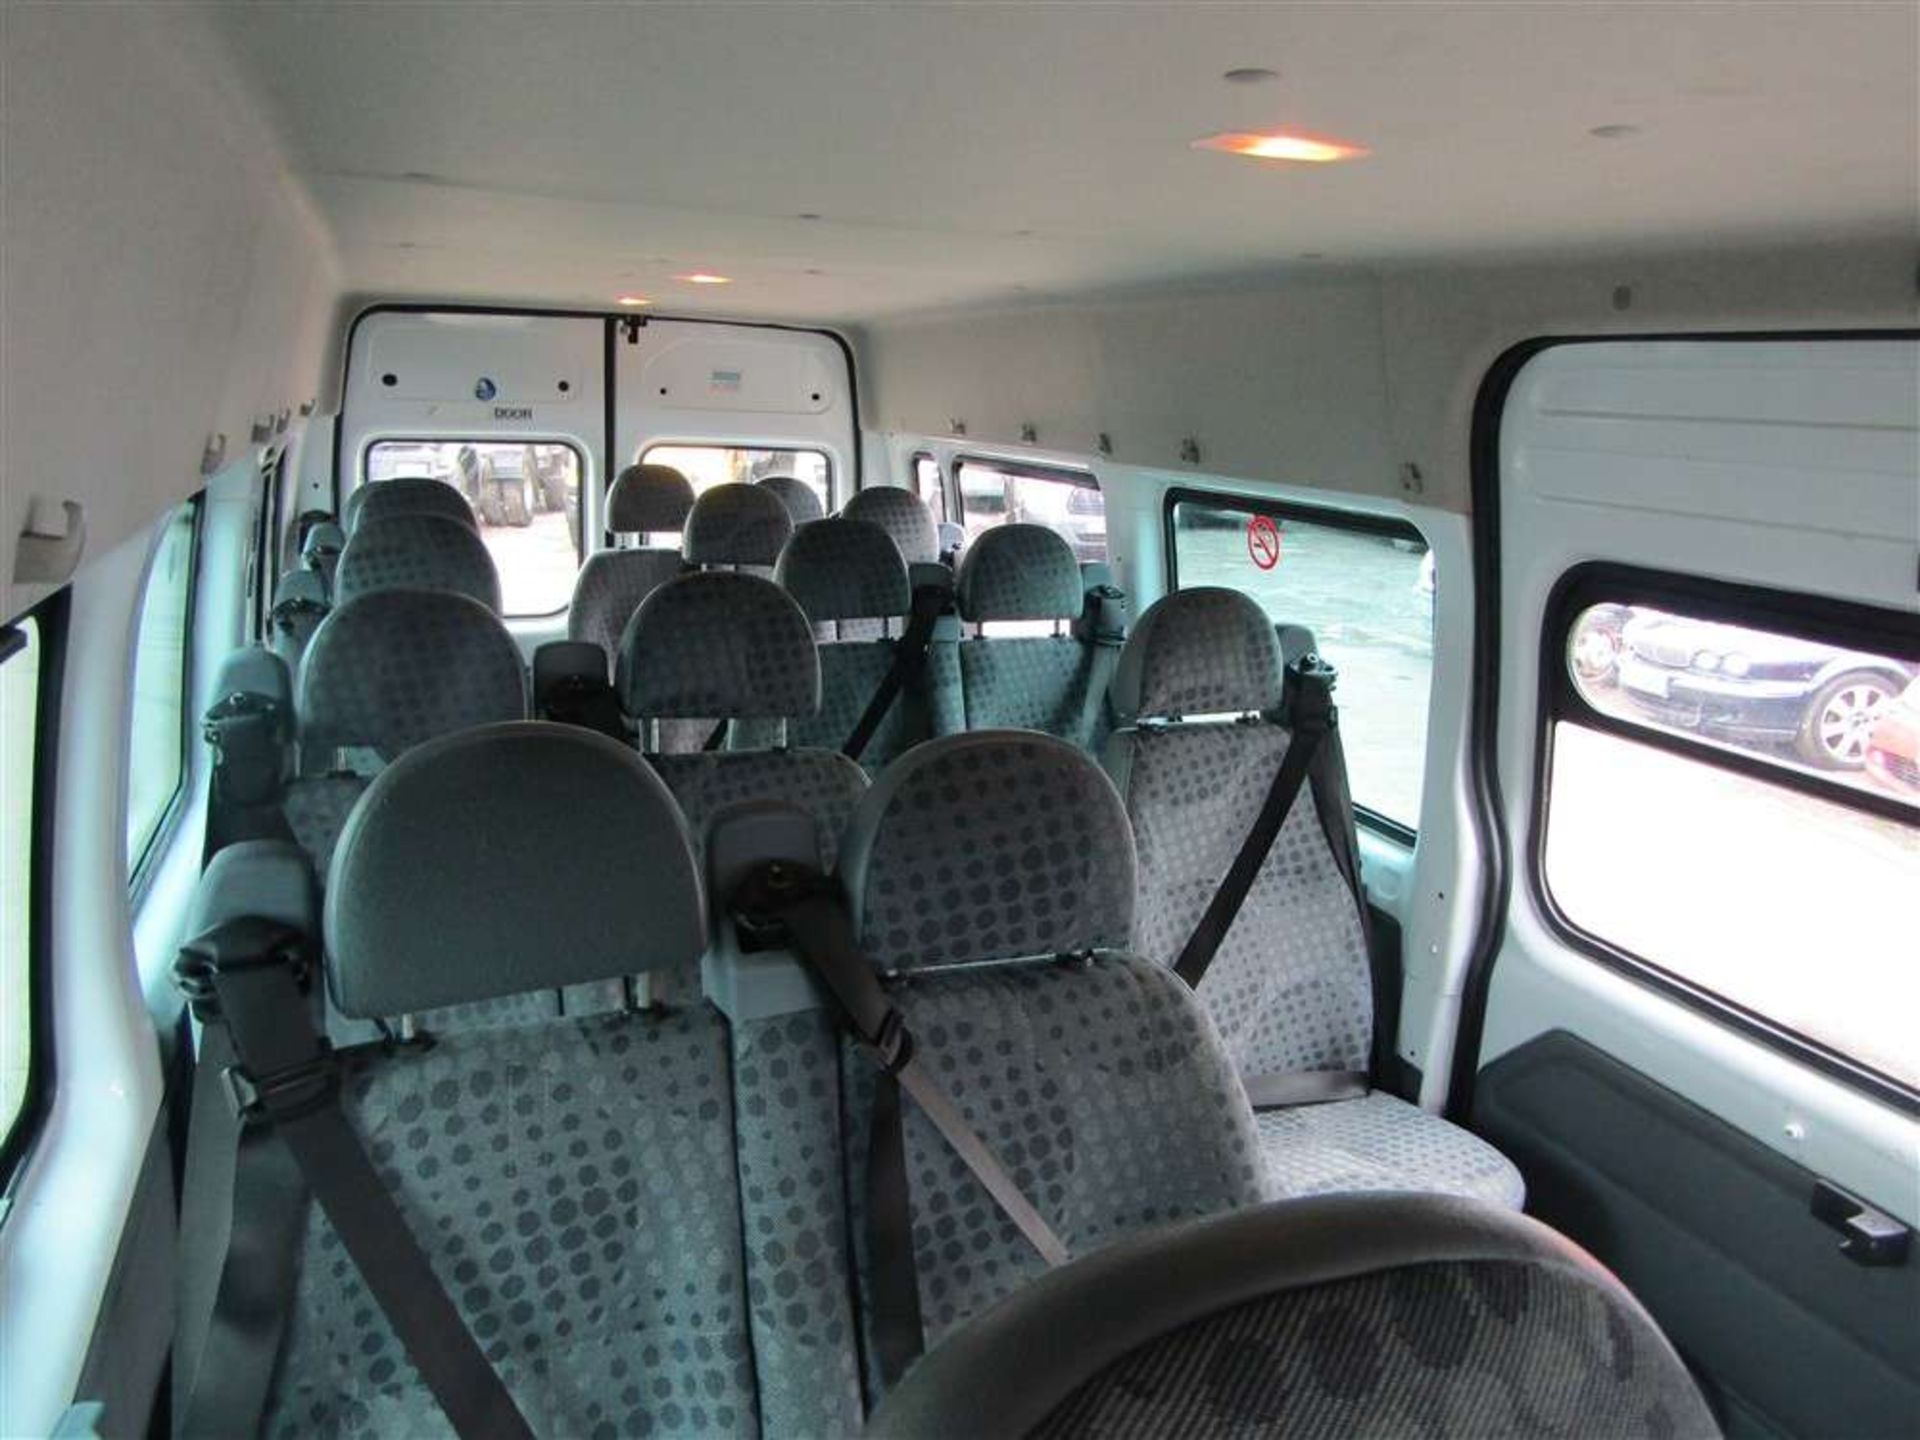 2007 57 reg Ford Transit 100 17 Seat RWD Minibus (Direct Council) - Image 5 of 7